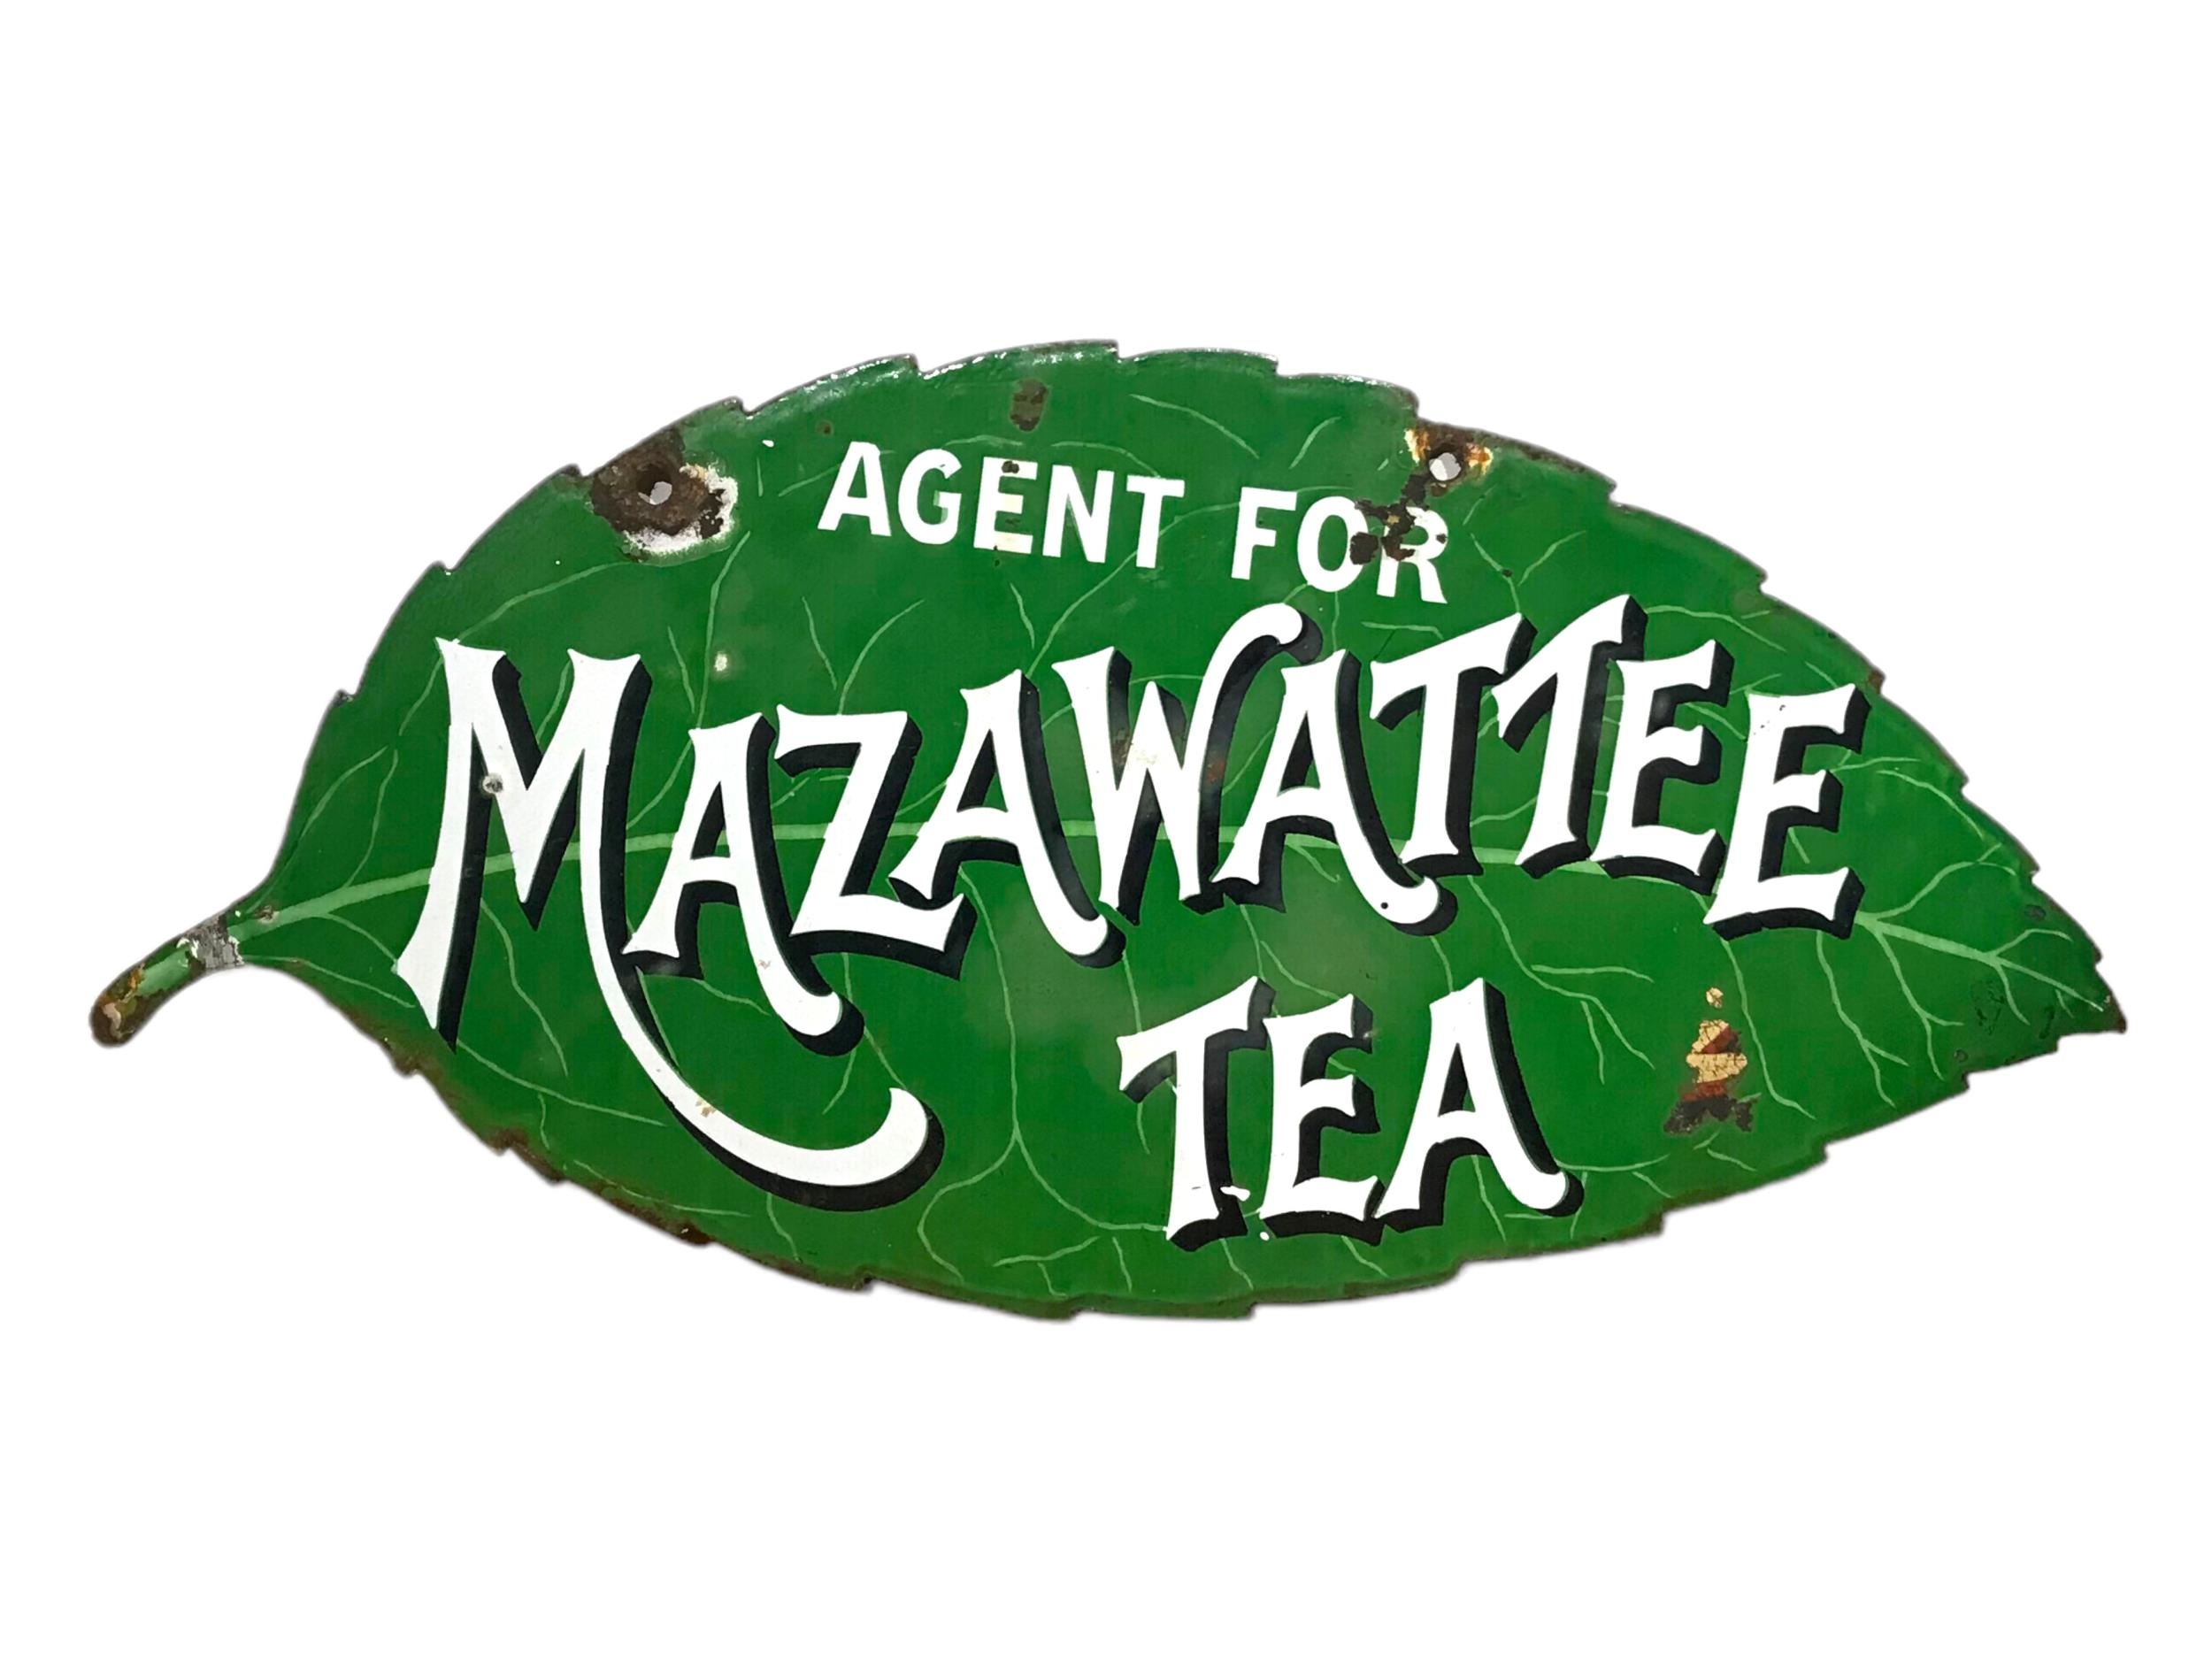 A RARE MAZAWATTEE TEA DOUBLE SIDED LEAF FORM ENAMEL SIGN. (53.8cm x 26.2cm)